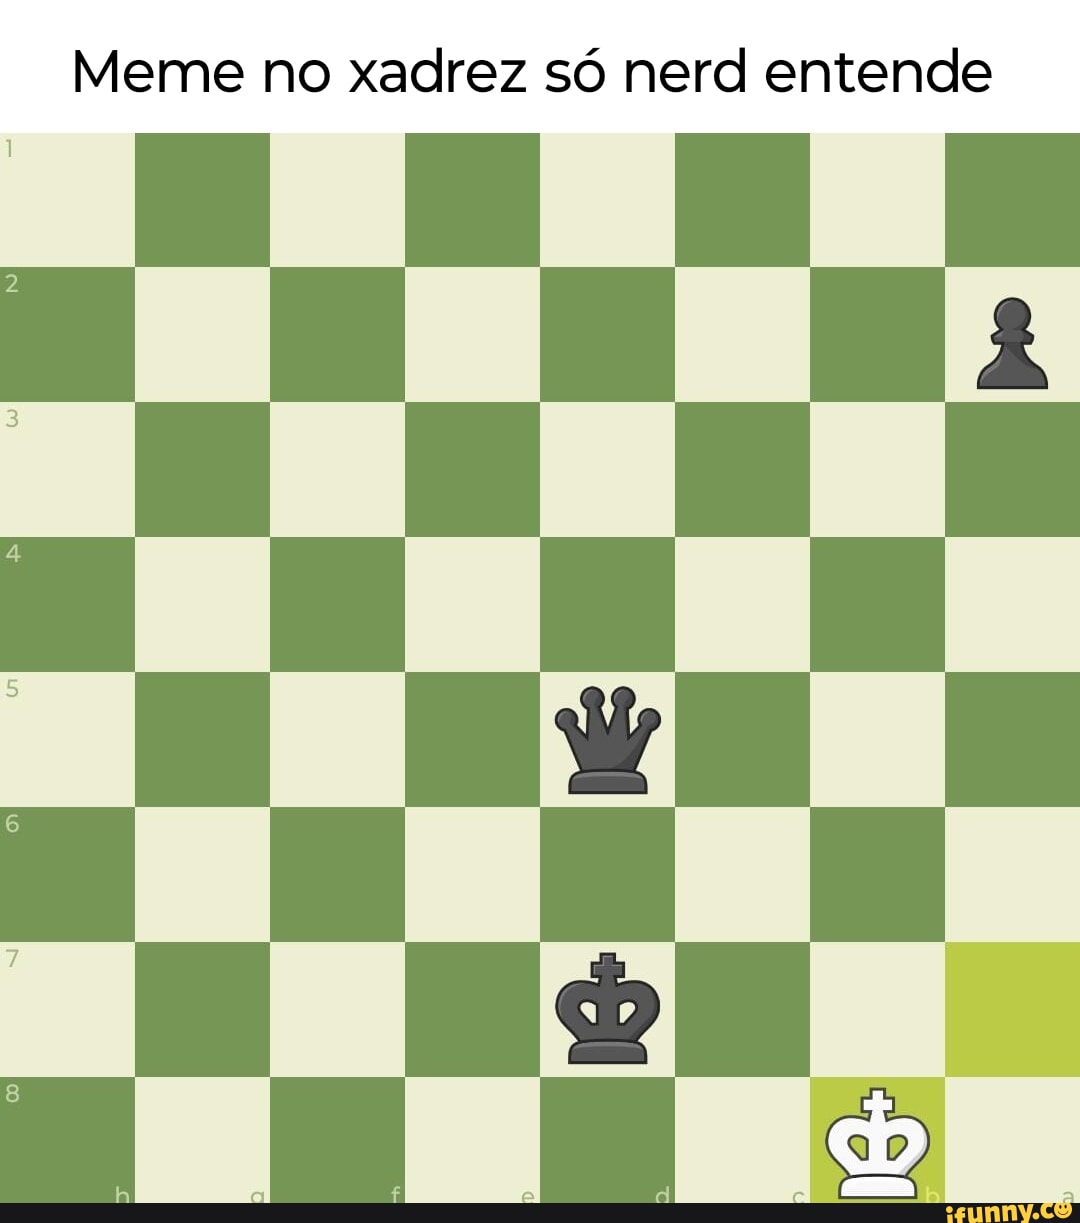 Eu jogando xadrez sozinho : ais - iFunny Brazil